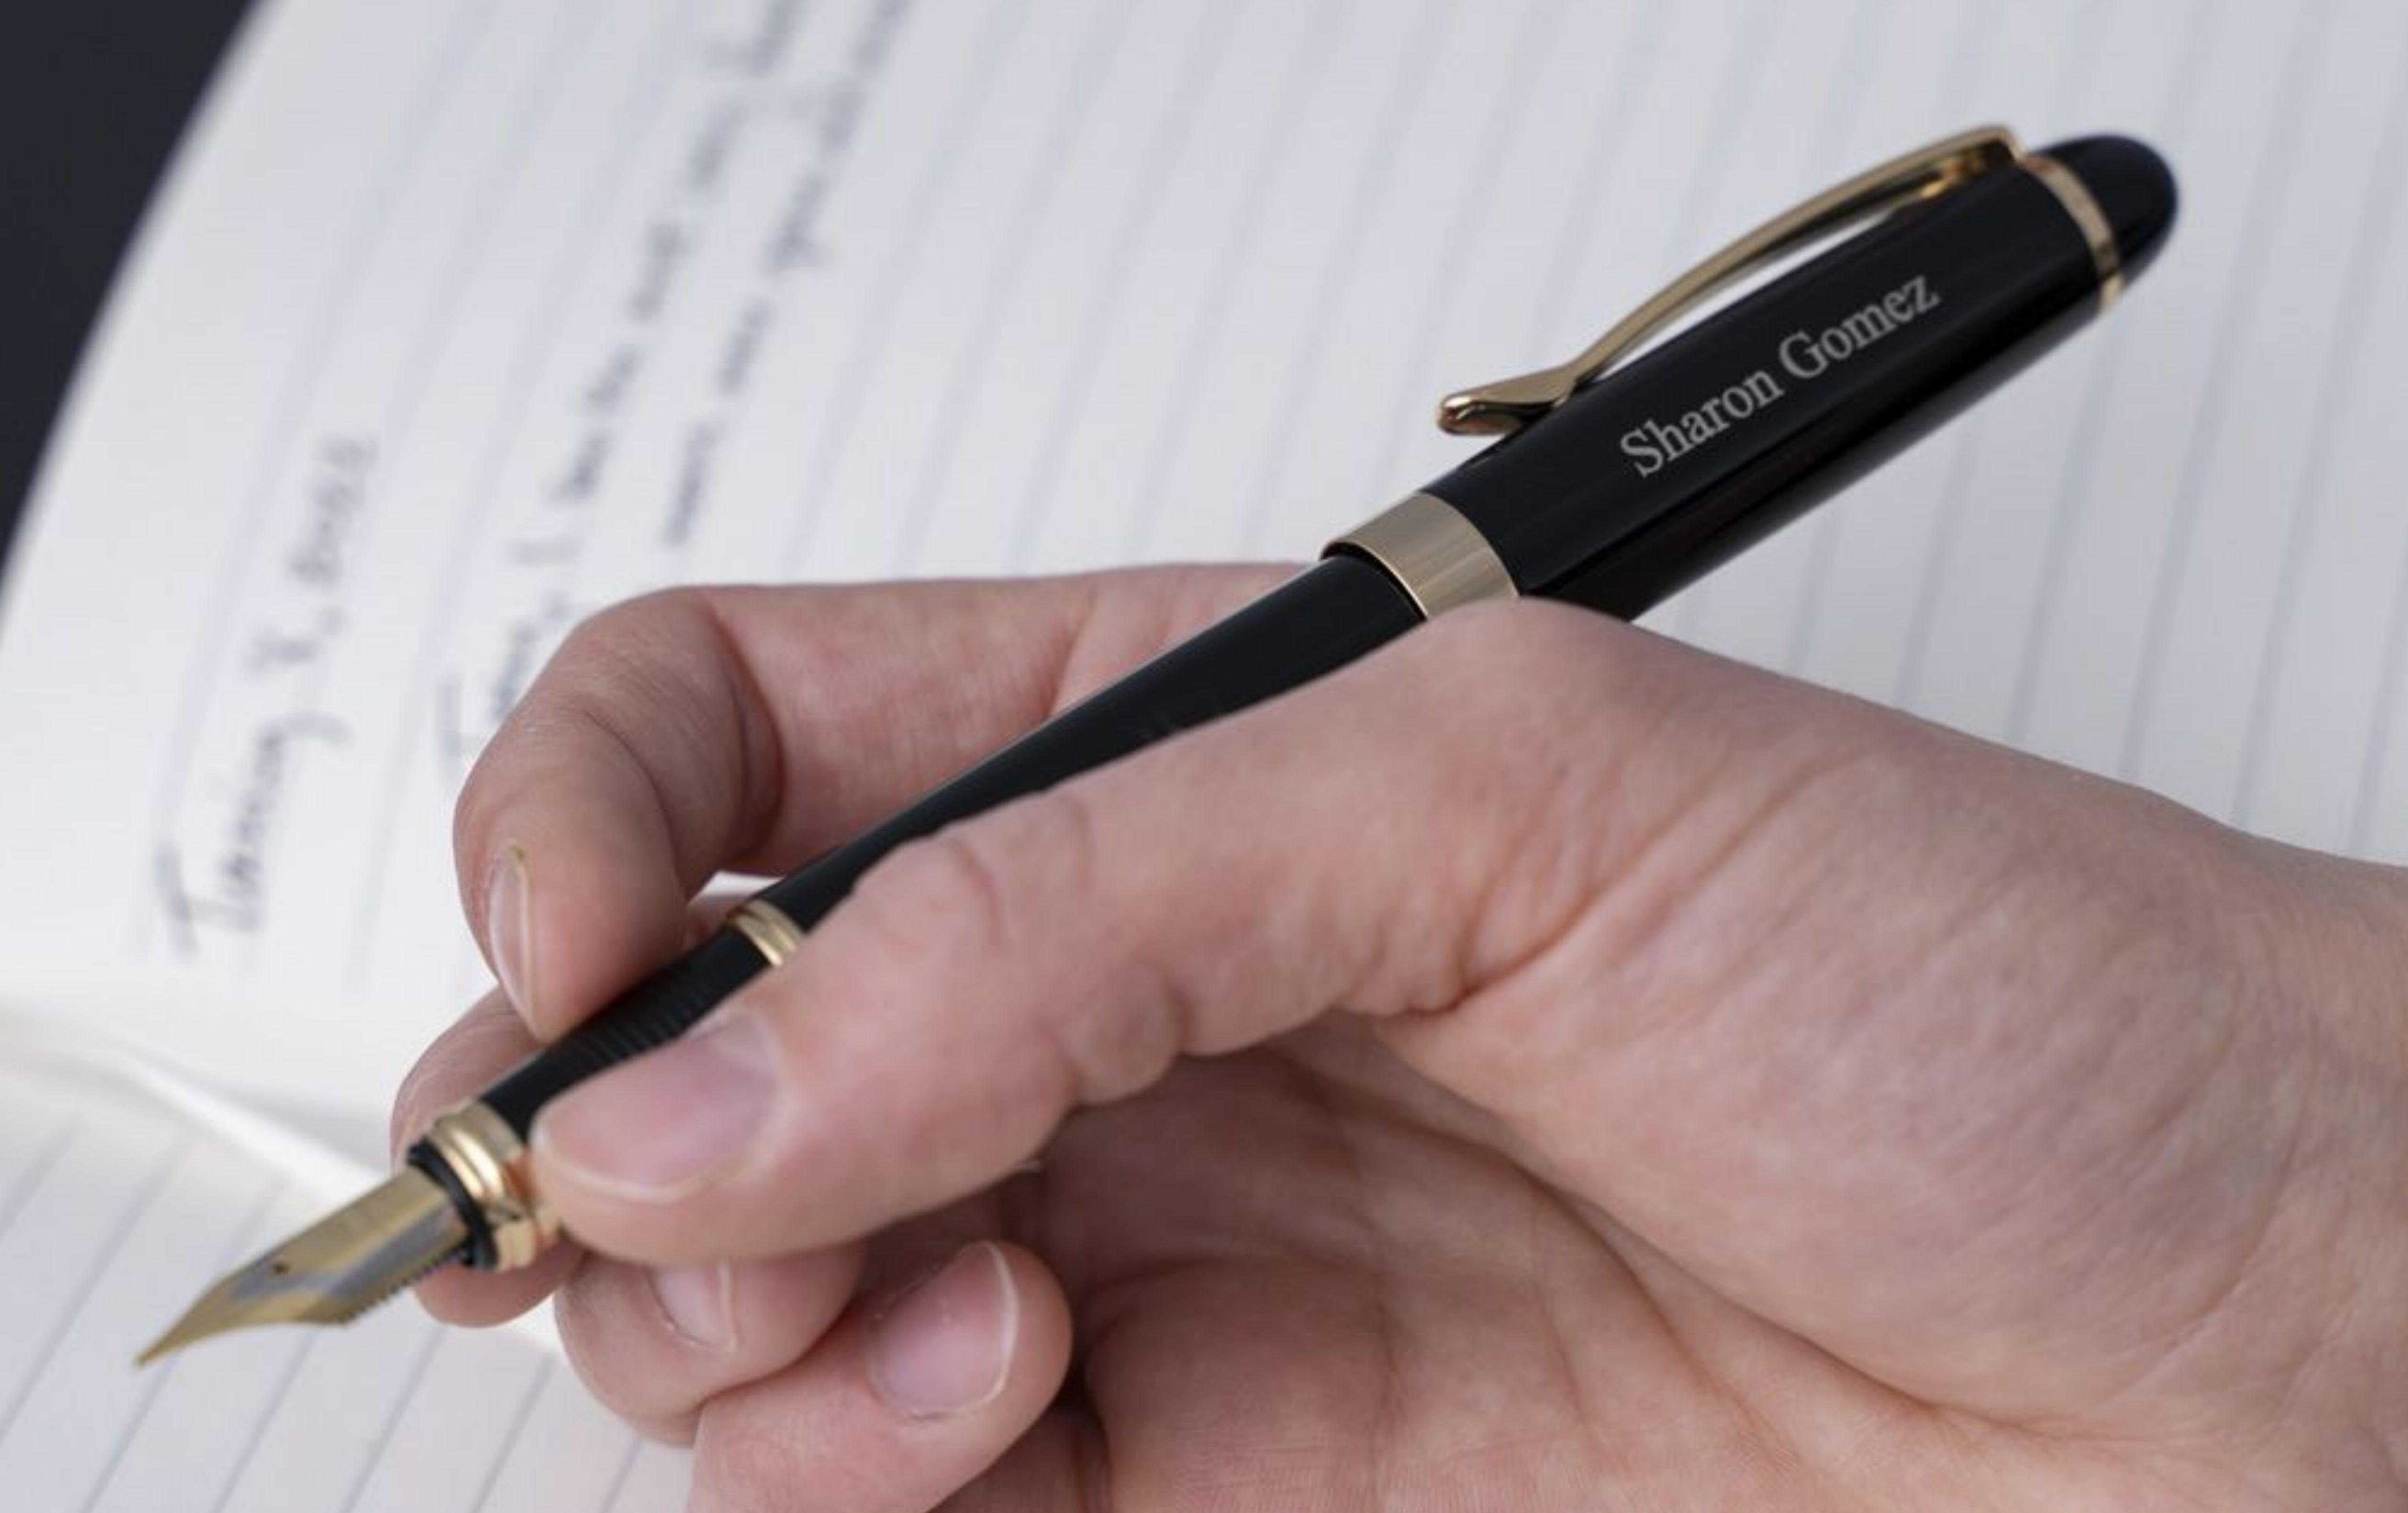 Custom CEO Pen Sets, Personalized Wood Desktop Pen Set, Secretary Gift,  Company Logo Pen Cases, Coworker, Bosses Gift, Employee Gift 